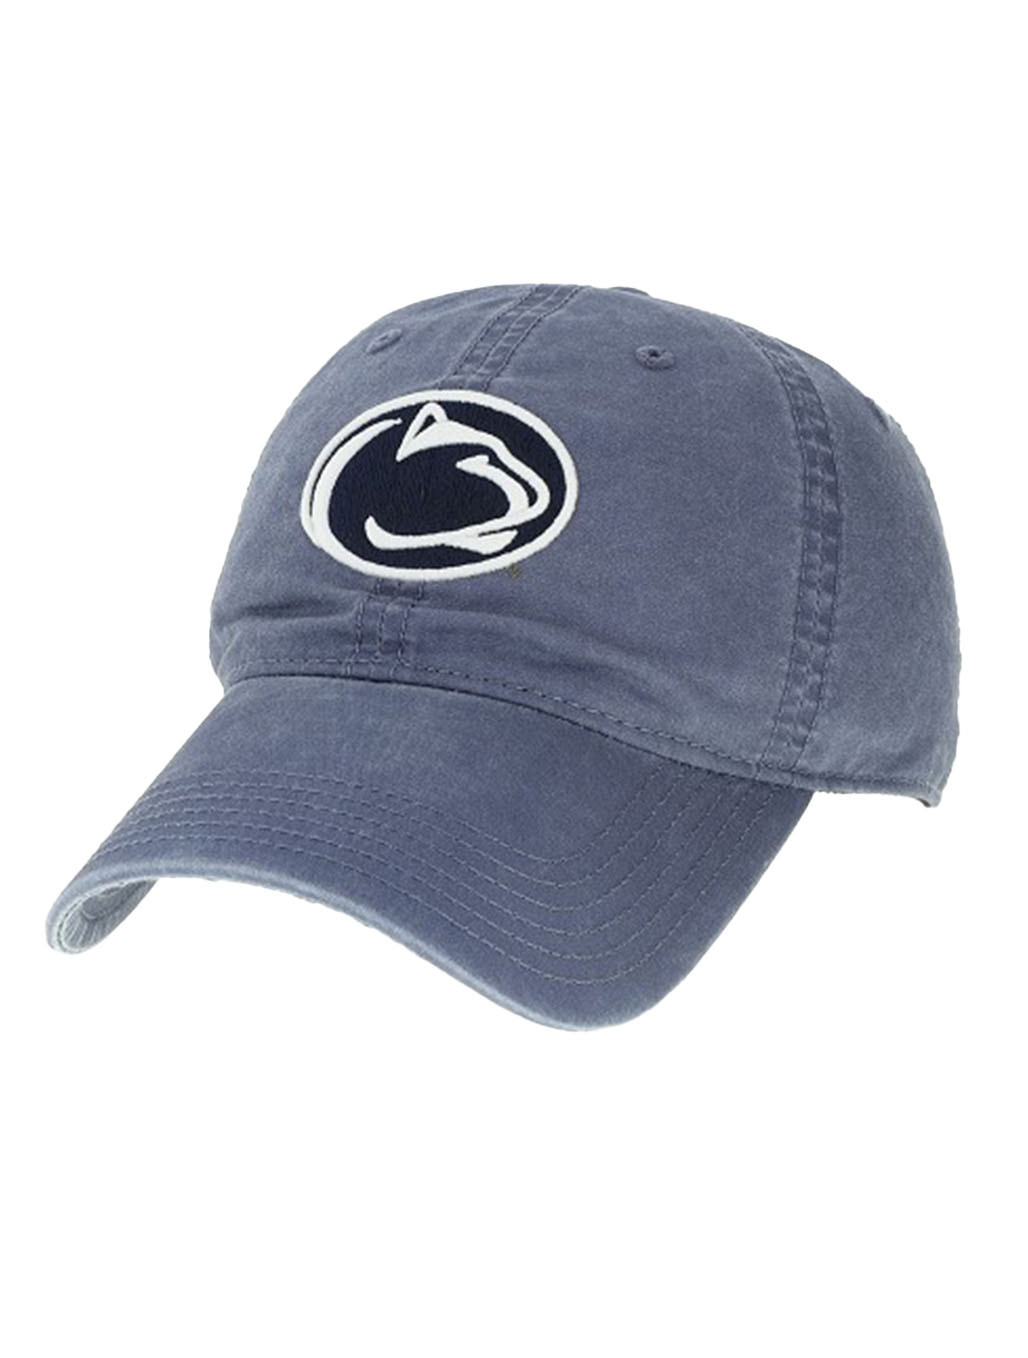 Lake Blue Penn State Hat